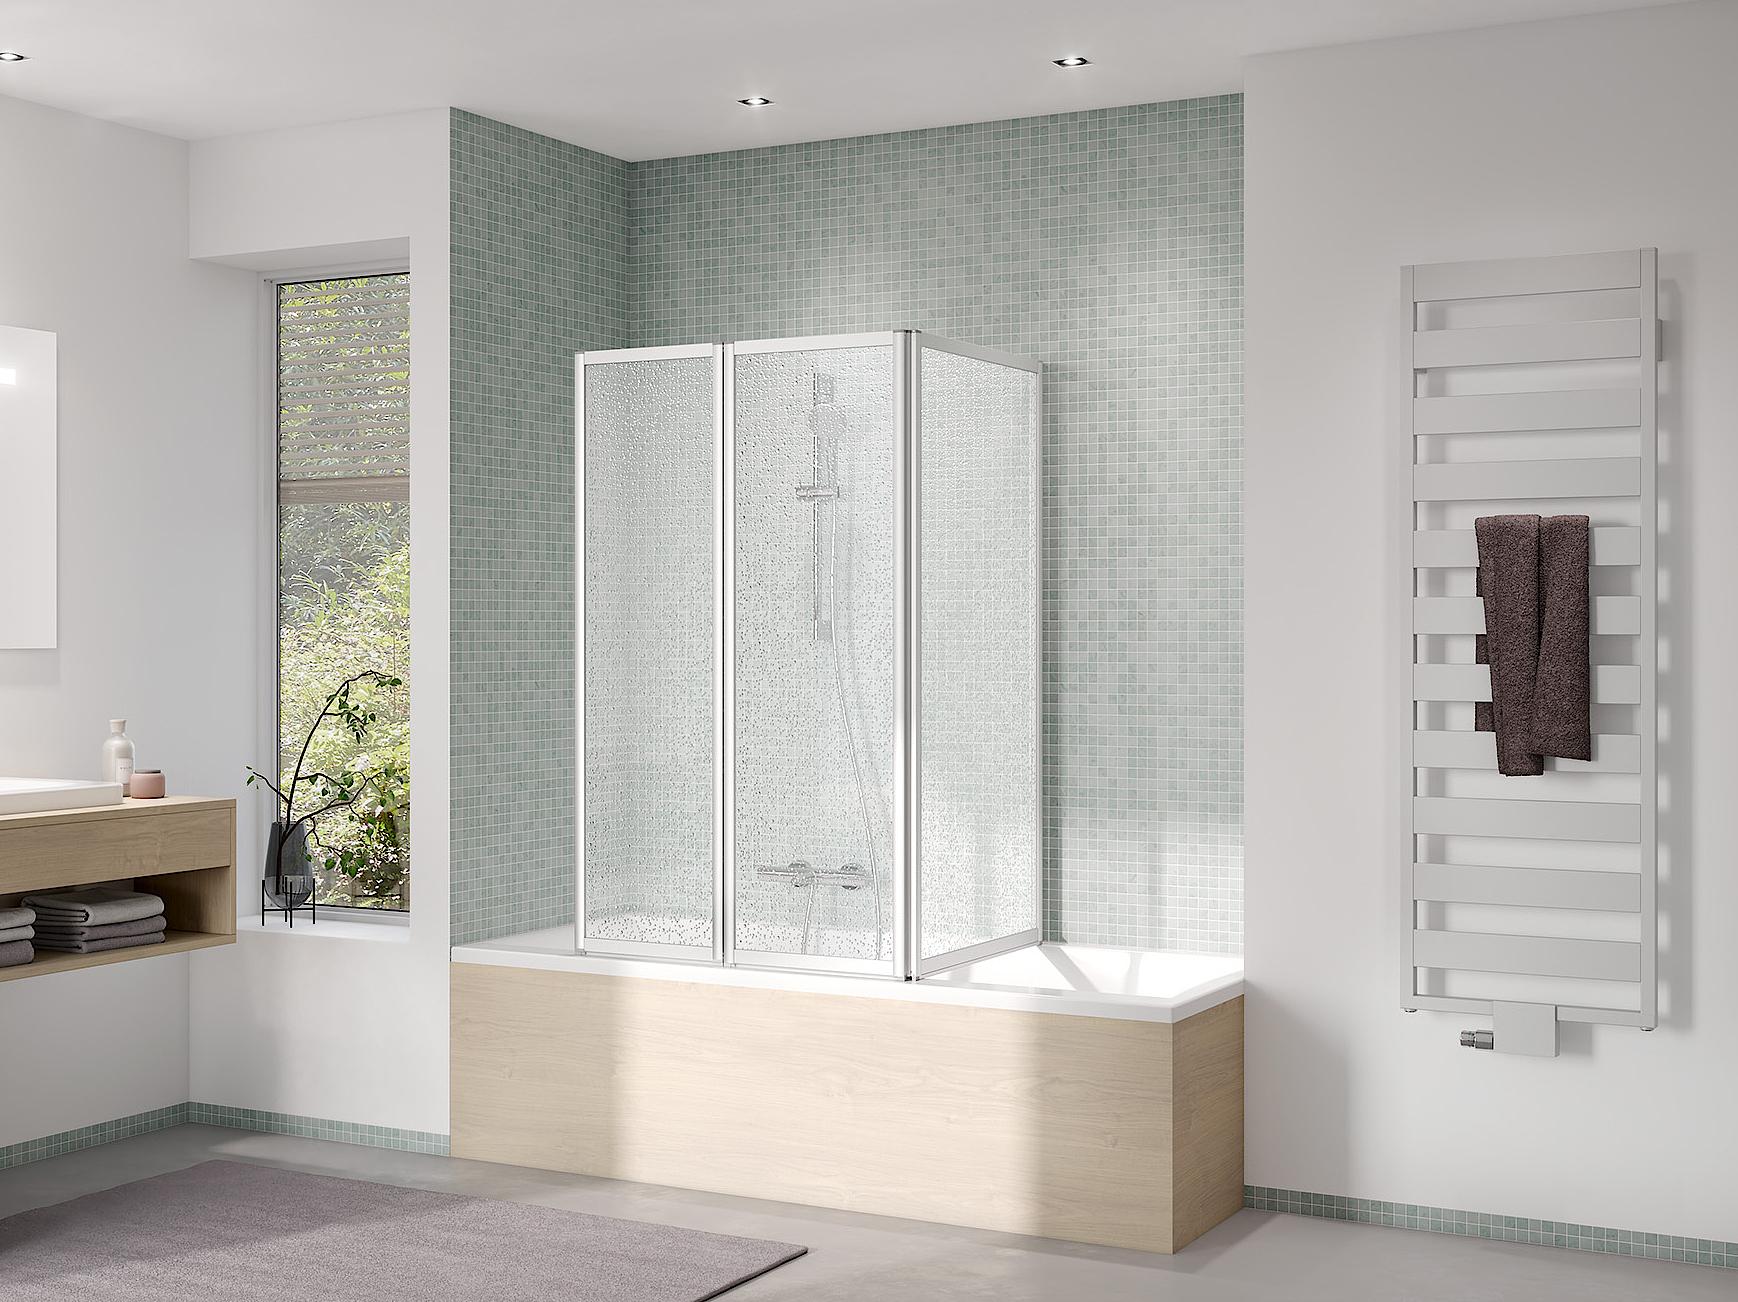 Kermi shower enclosure, VARIO 2000 three-panel folding screen on bathtub